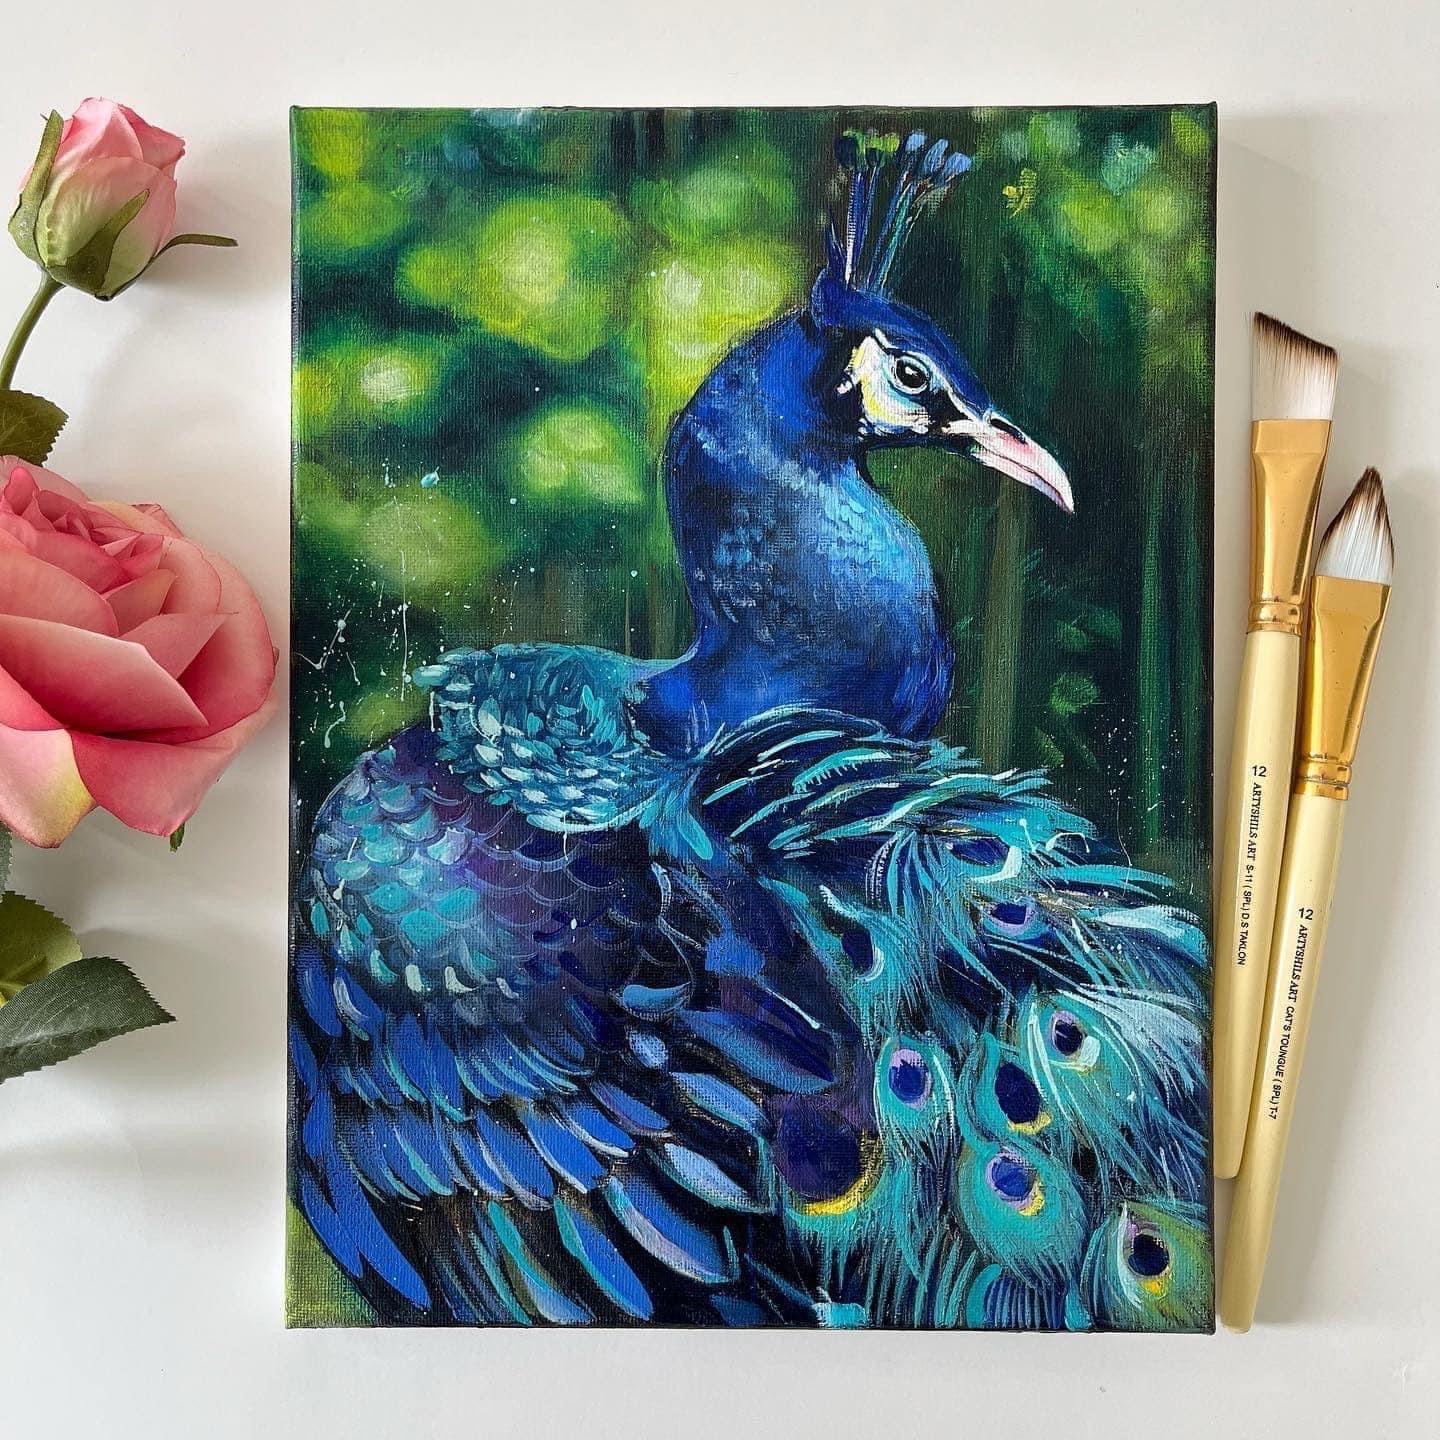 ORIGINAL ART :- The beautiful peacock